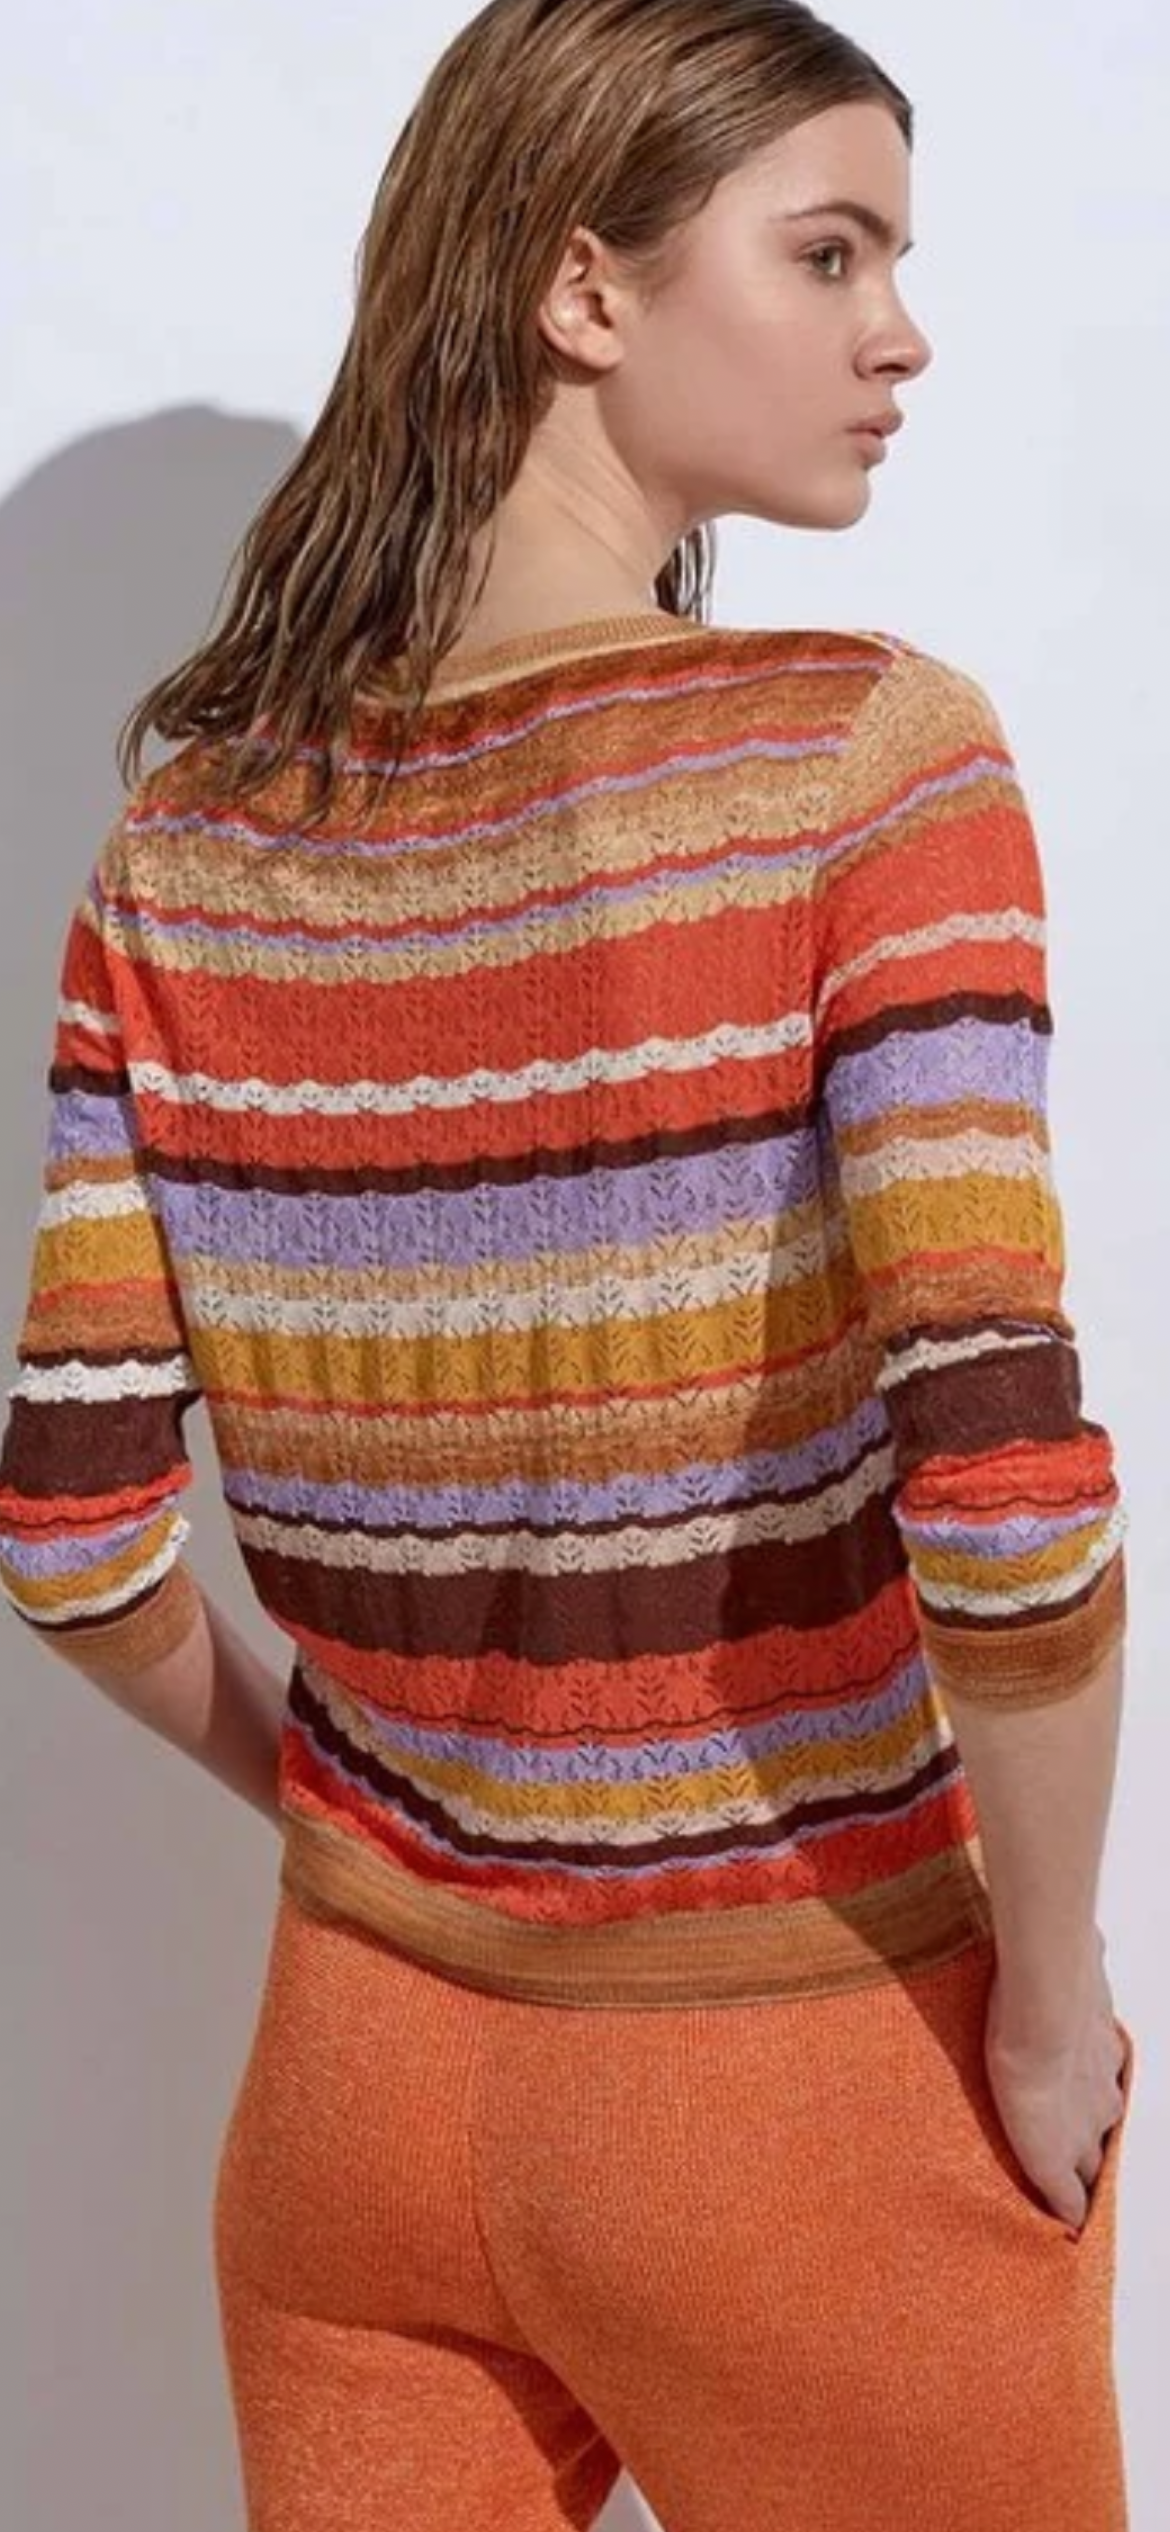 KNITSS-Stripe Patterned Terracotta Knit Cardigan